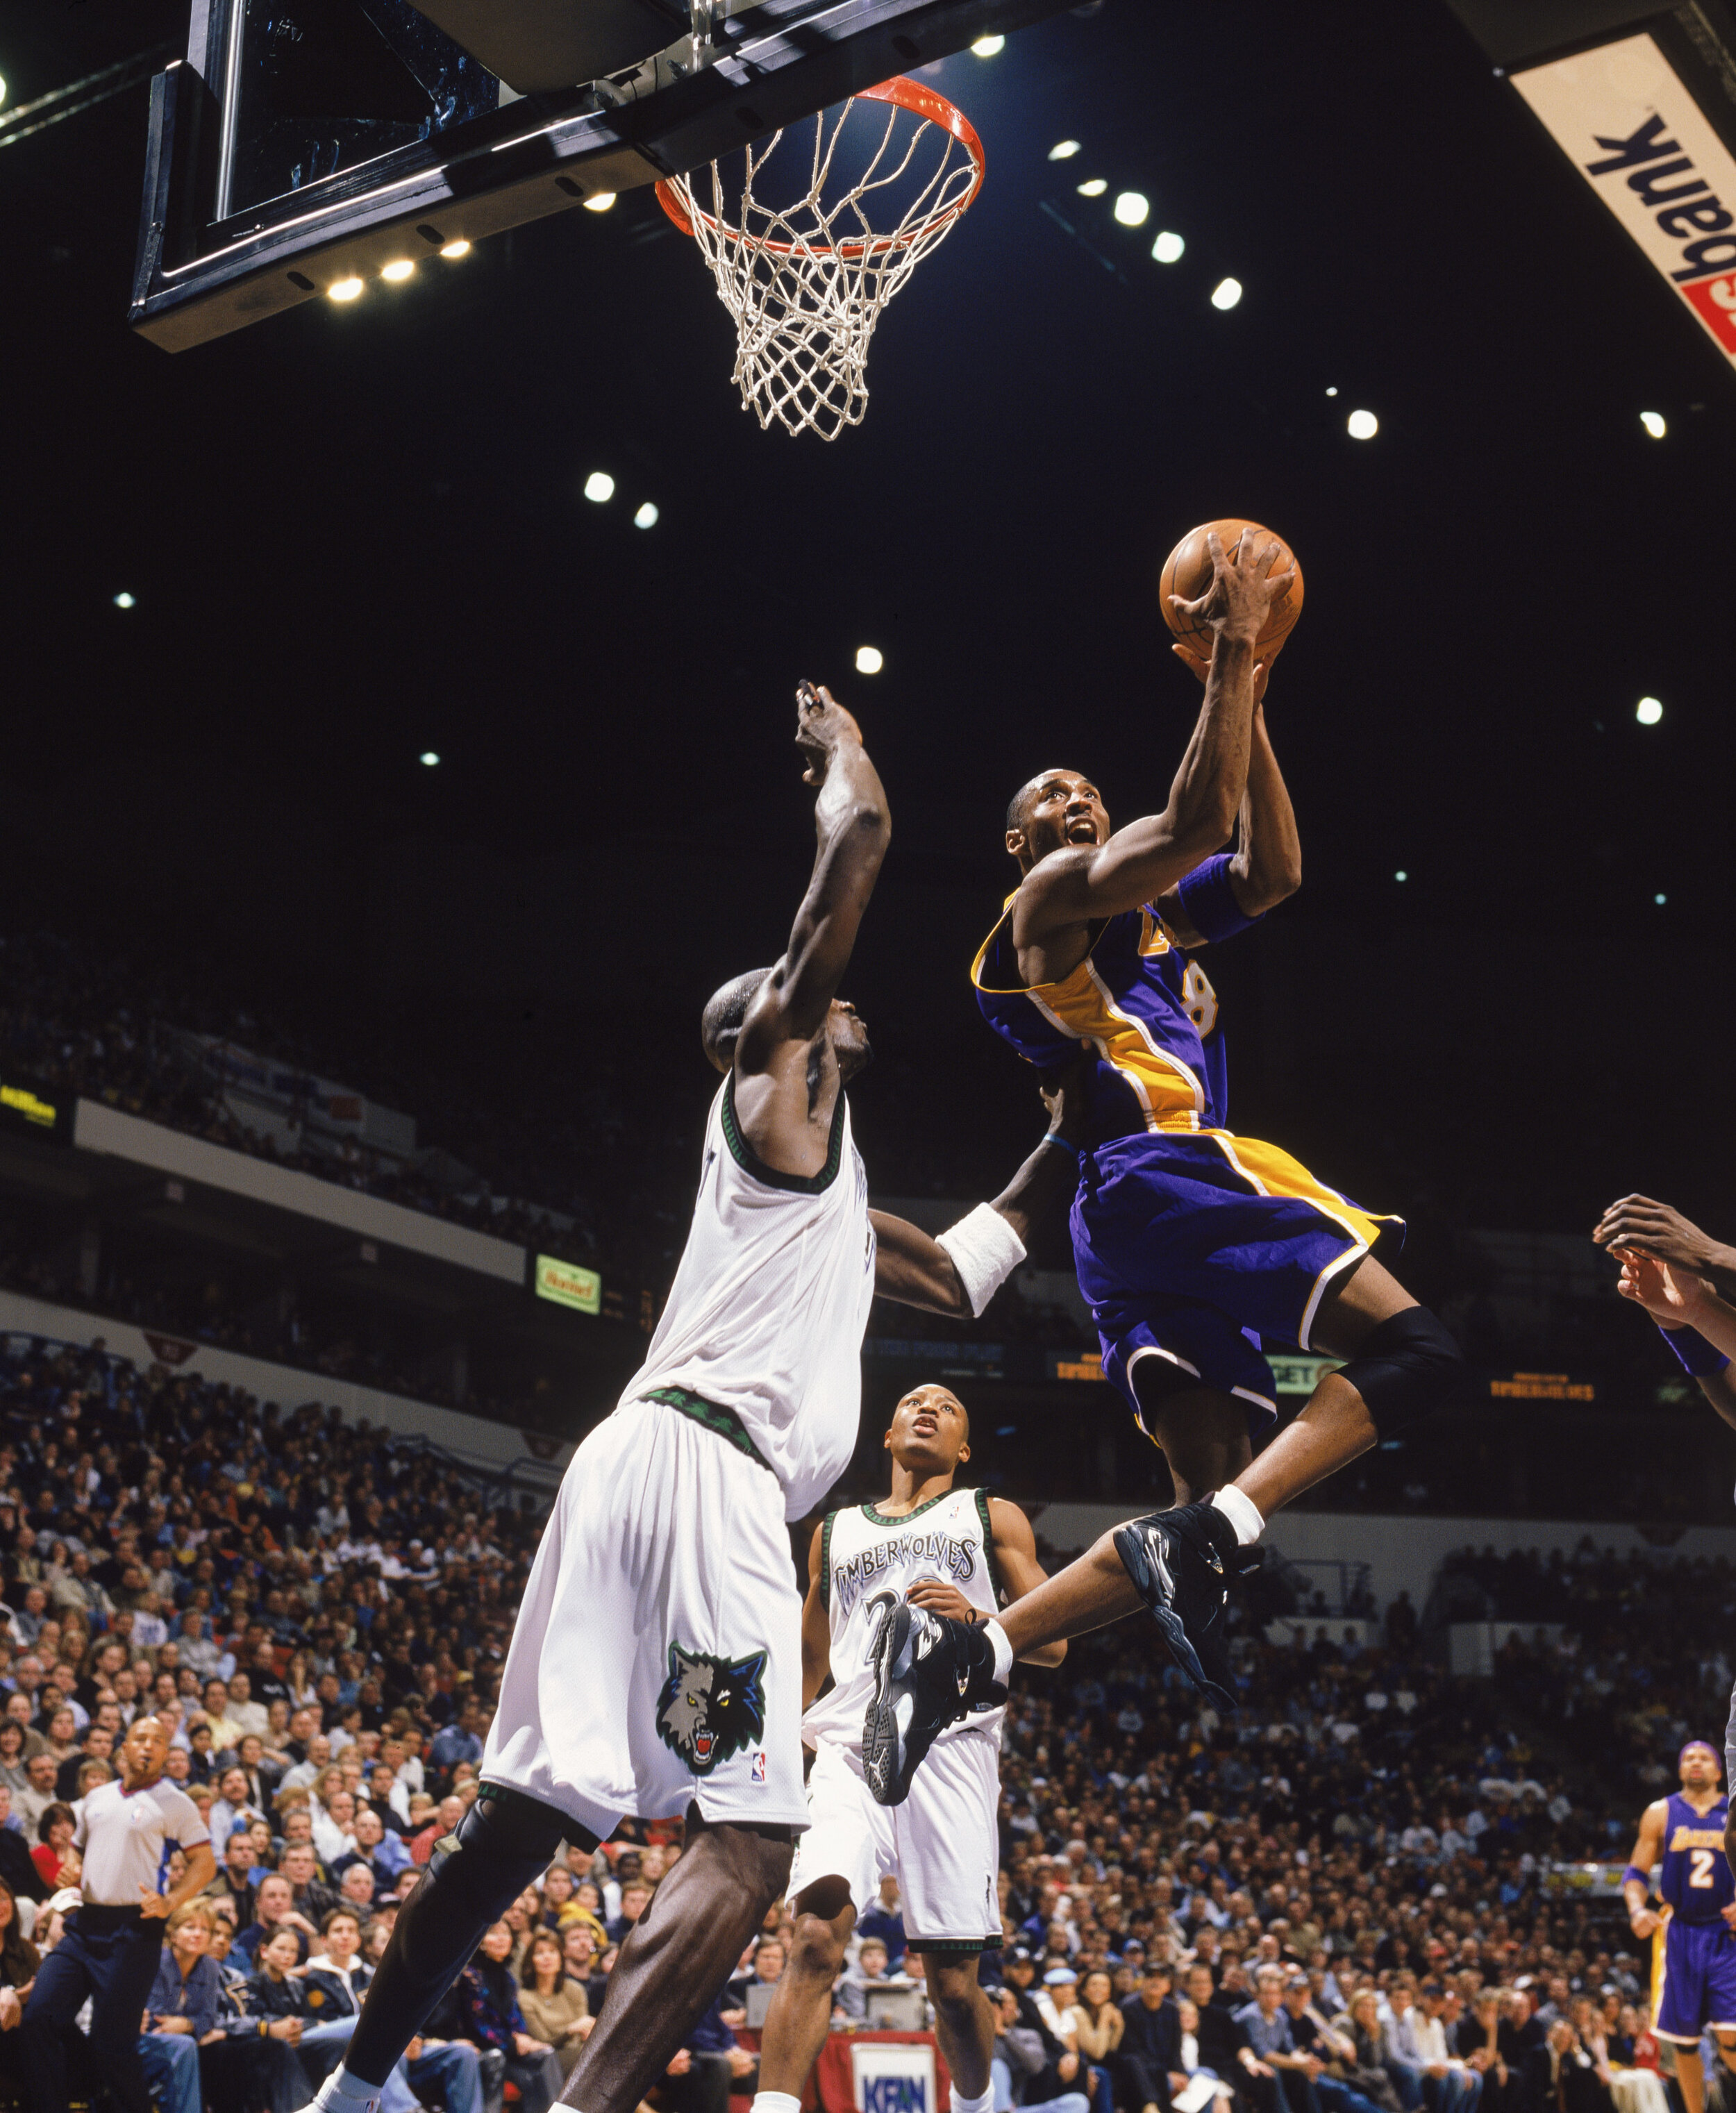  Kobe Bryant and Kevin Garnett  Los Angeles Lakers v. Minnesota Timberwolves, 2003 